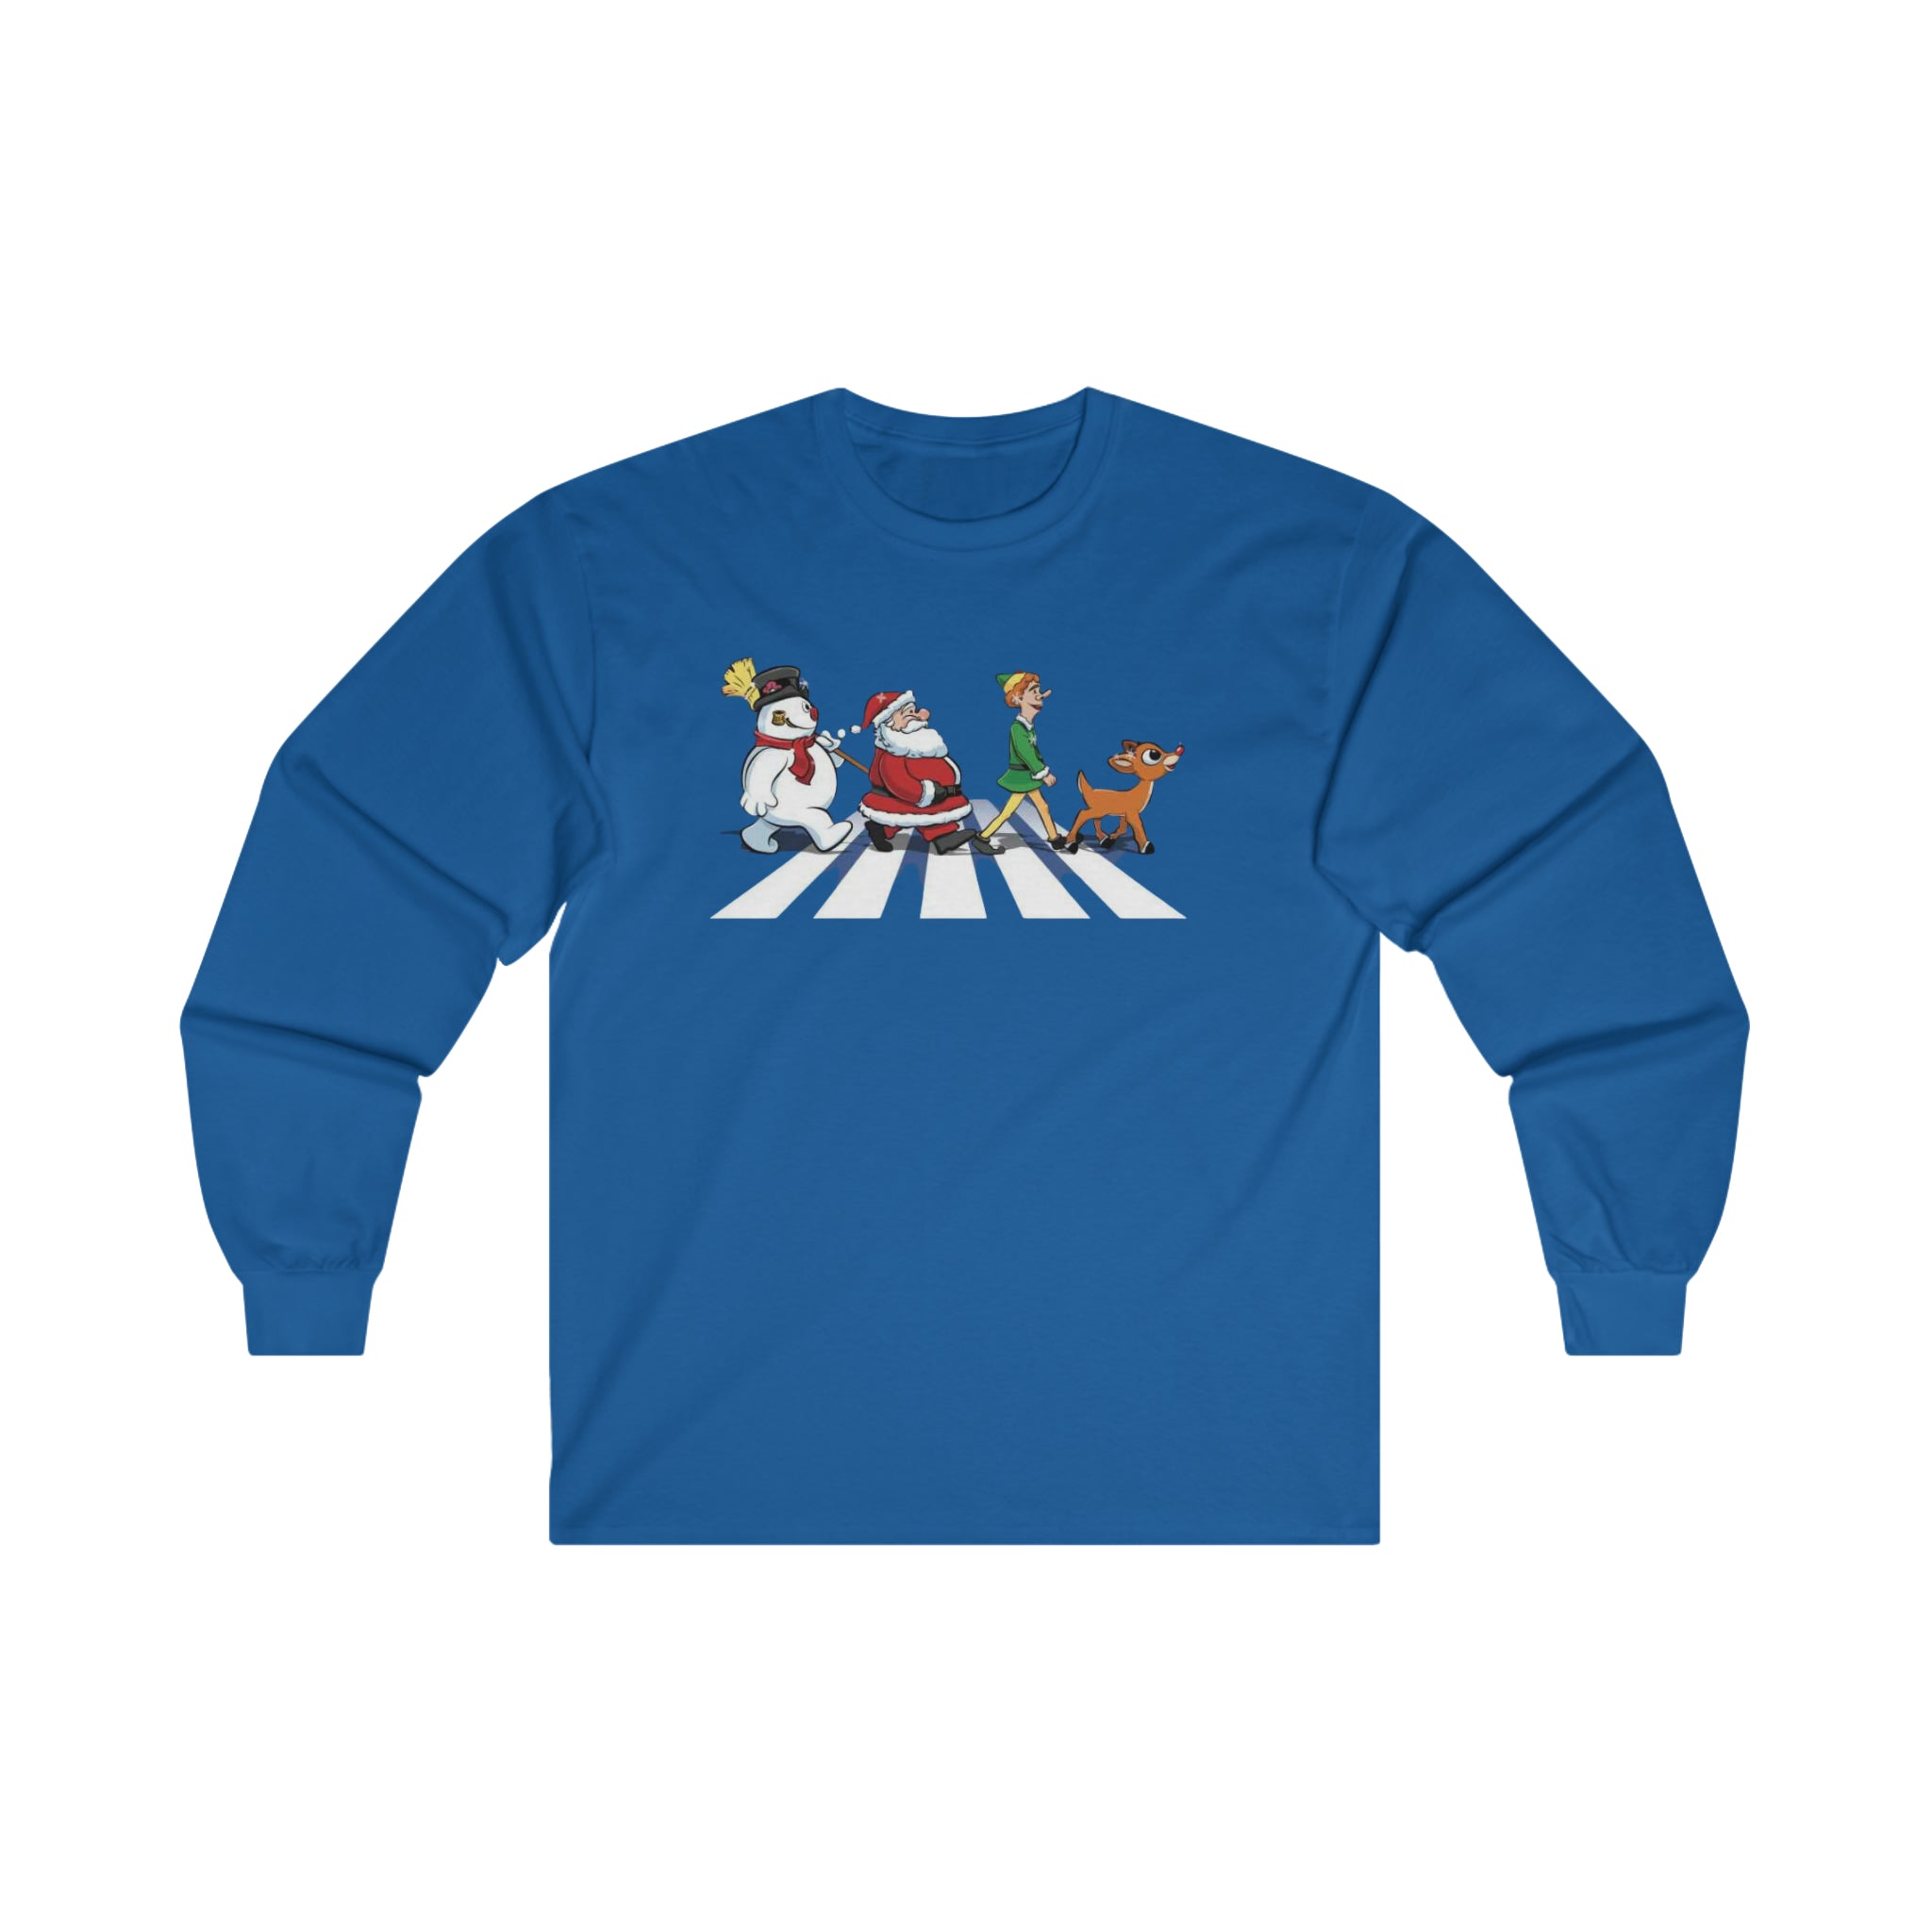 The Christmas Gang Long-Sleeve T-Shirt